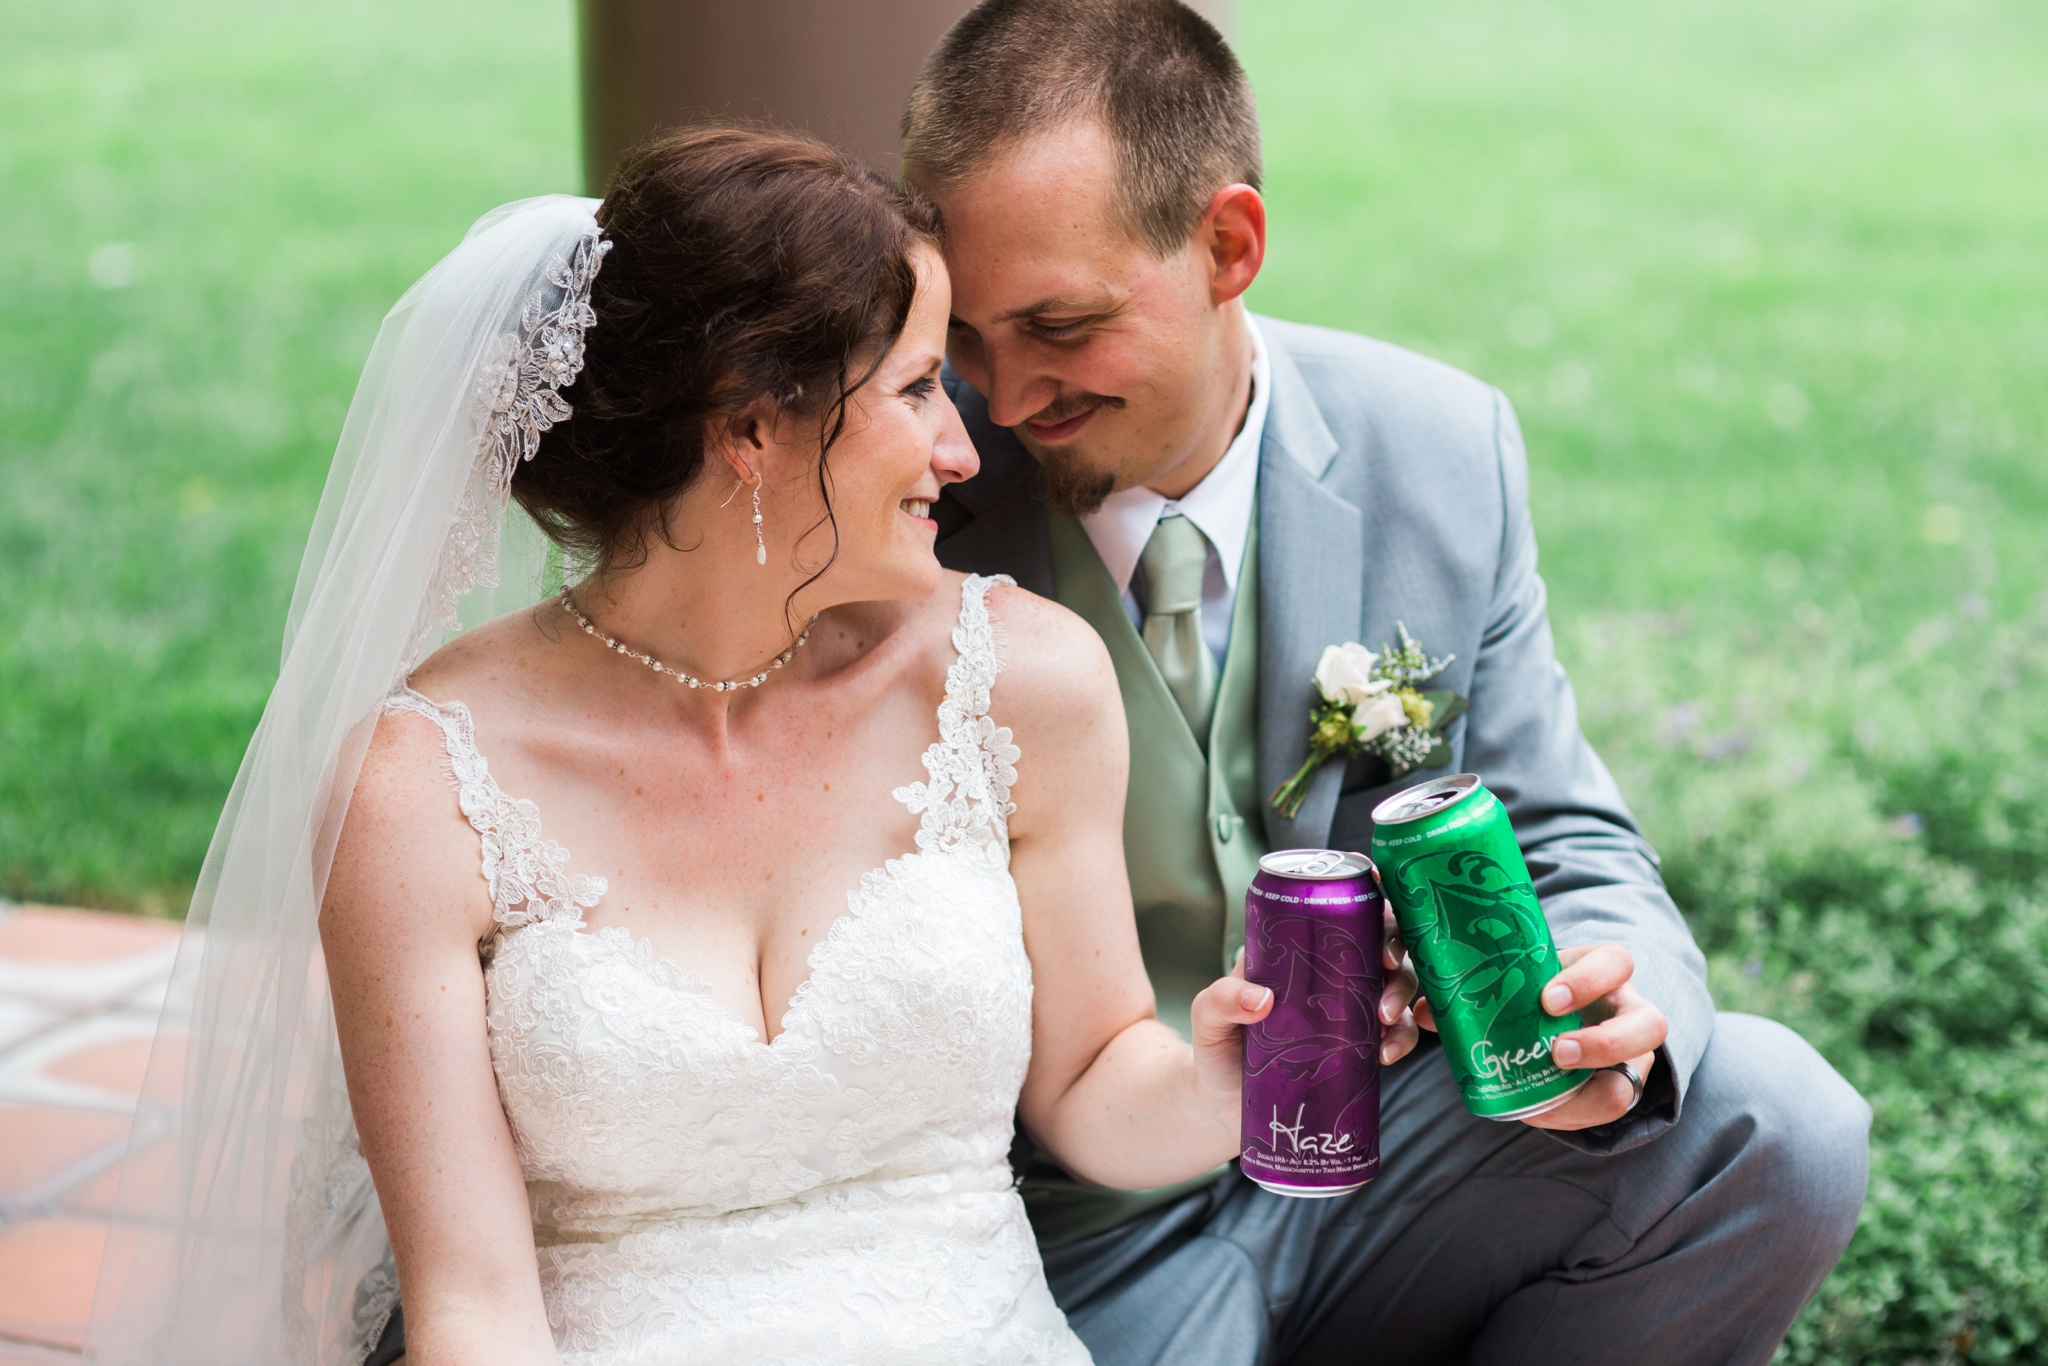 Emily Grace Photography, Lancaster PA Wedding Photographer, Moonstone Manor, Beer Garden Theme Wedding